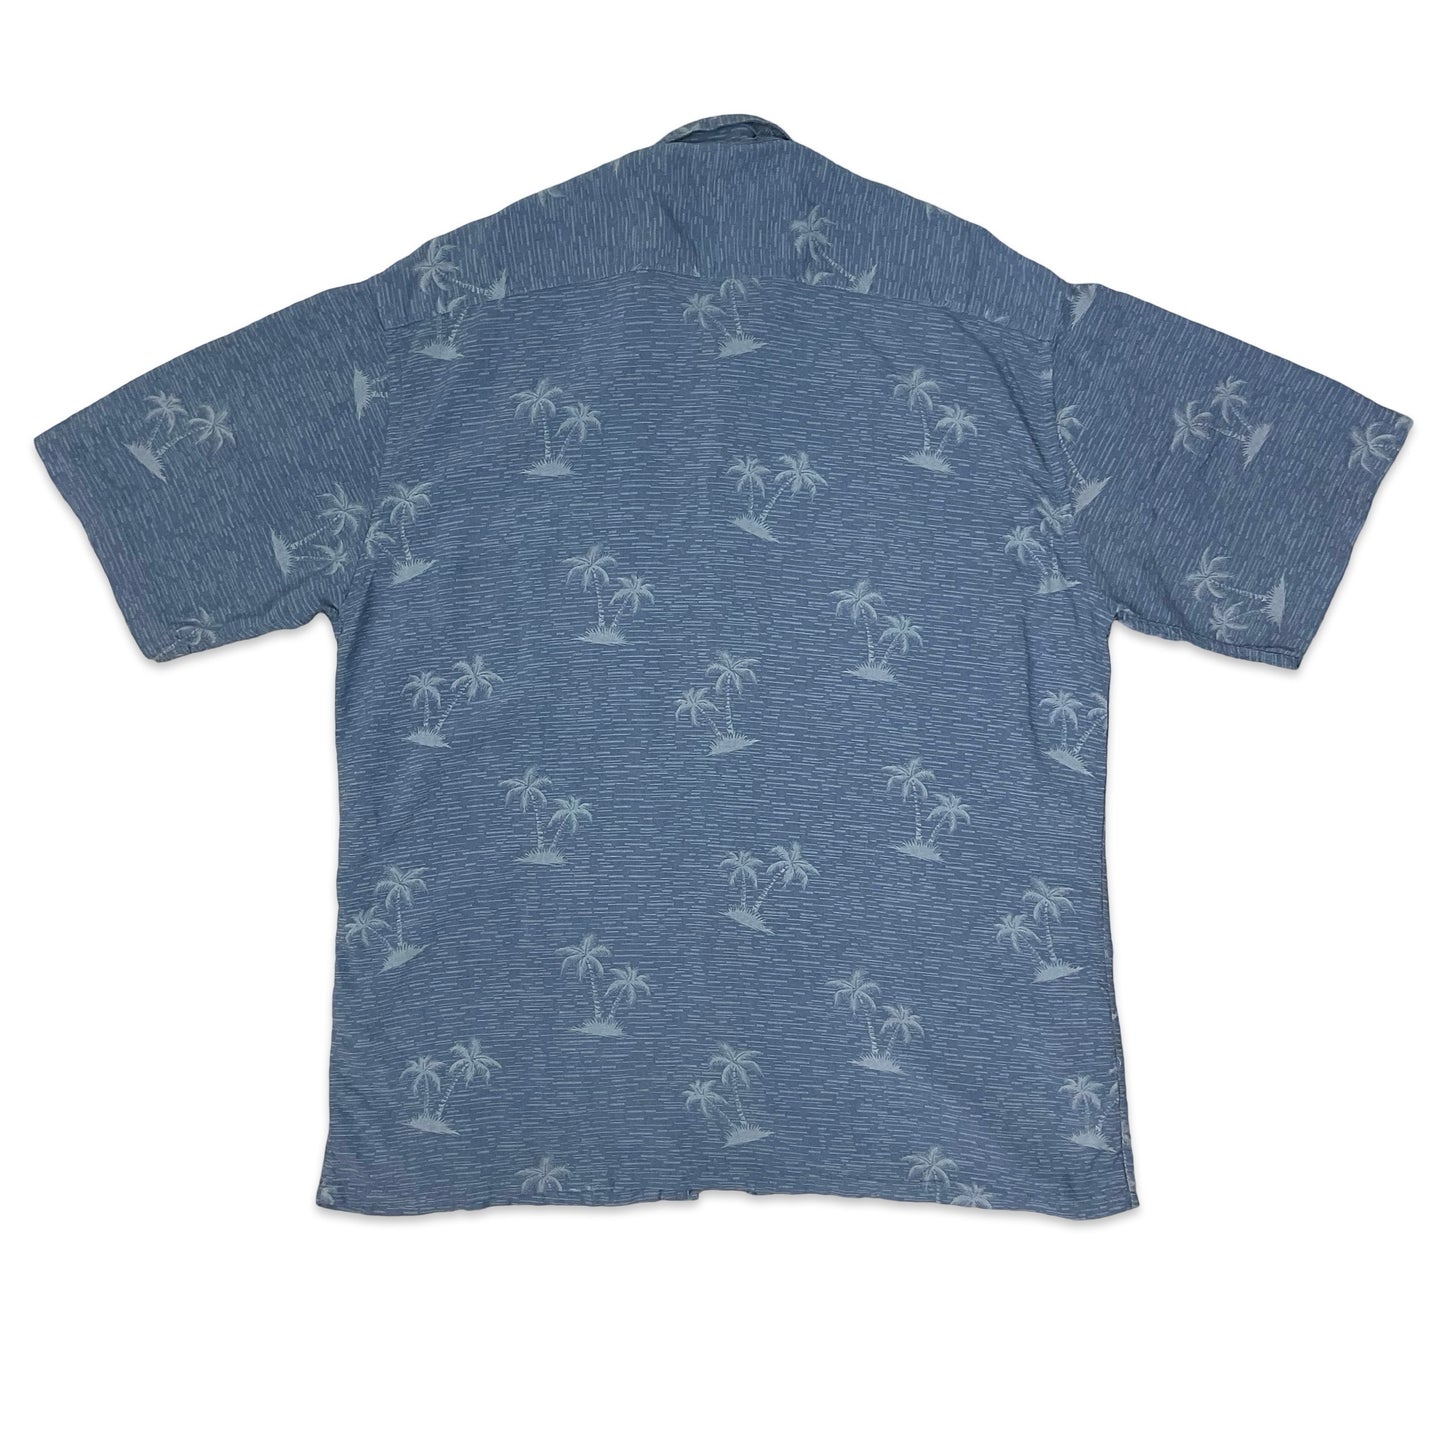 Vintage Pierre Cardin Blue Palm Tree Print Shirt M L